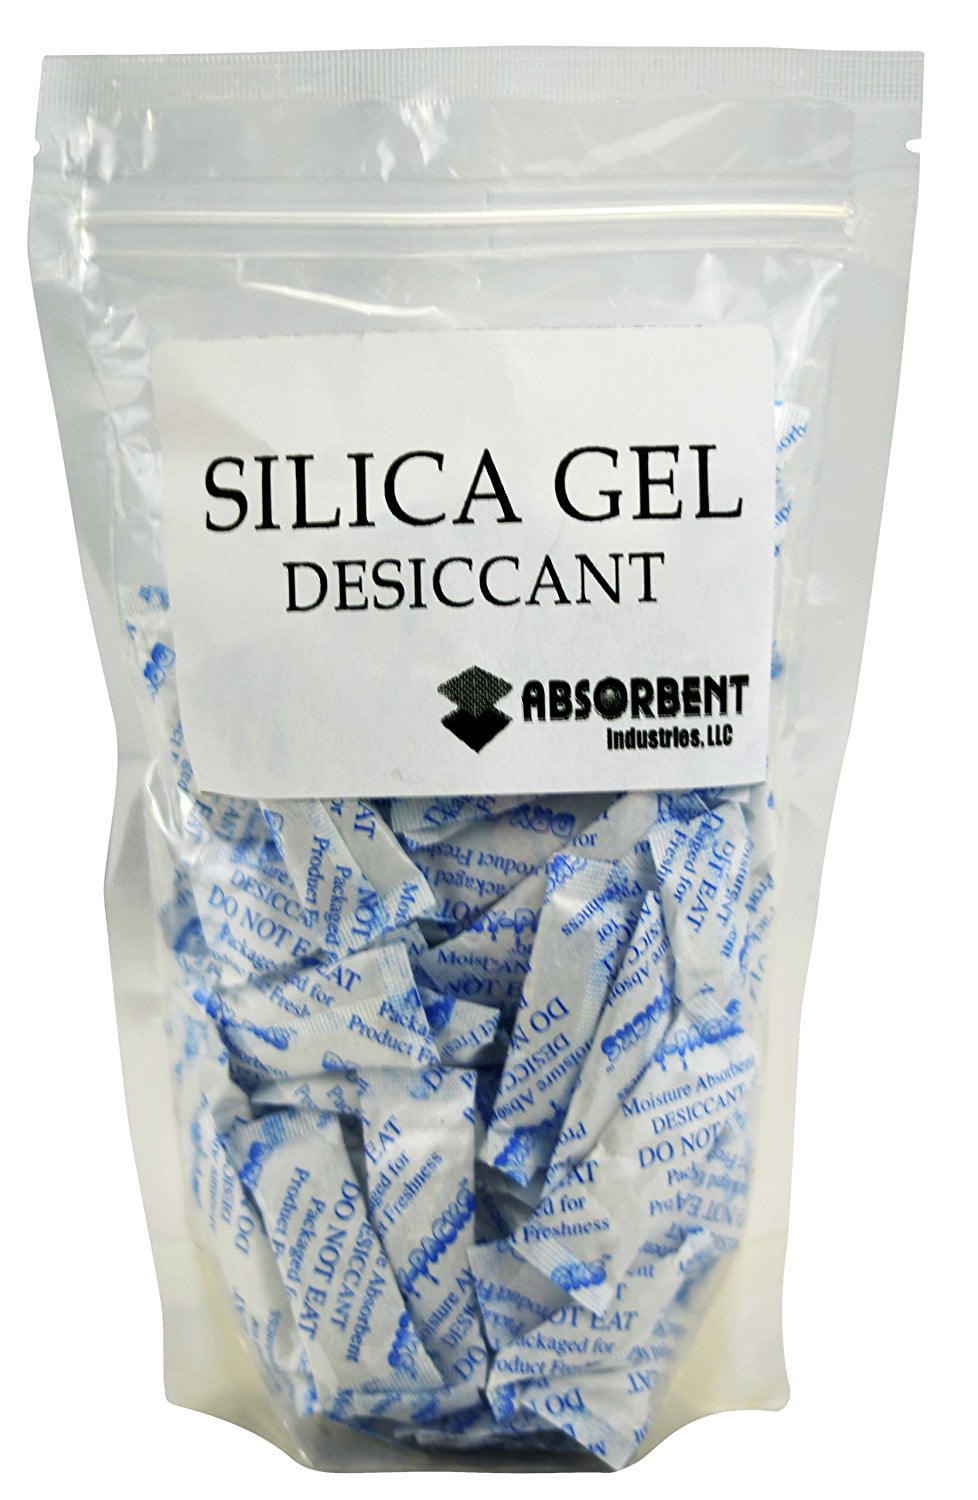 2 gram X 1000 PK Silica Gel Desiccant Moisture Absorber-FDA Compliant Food Safe 